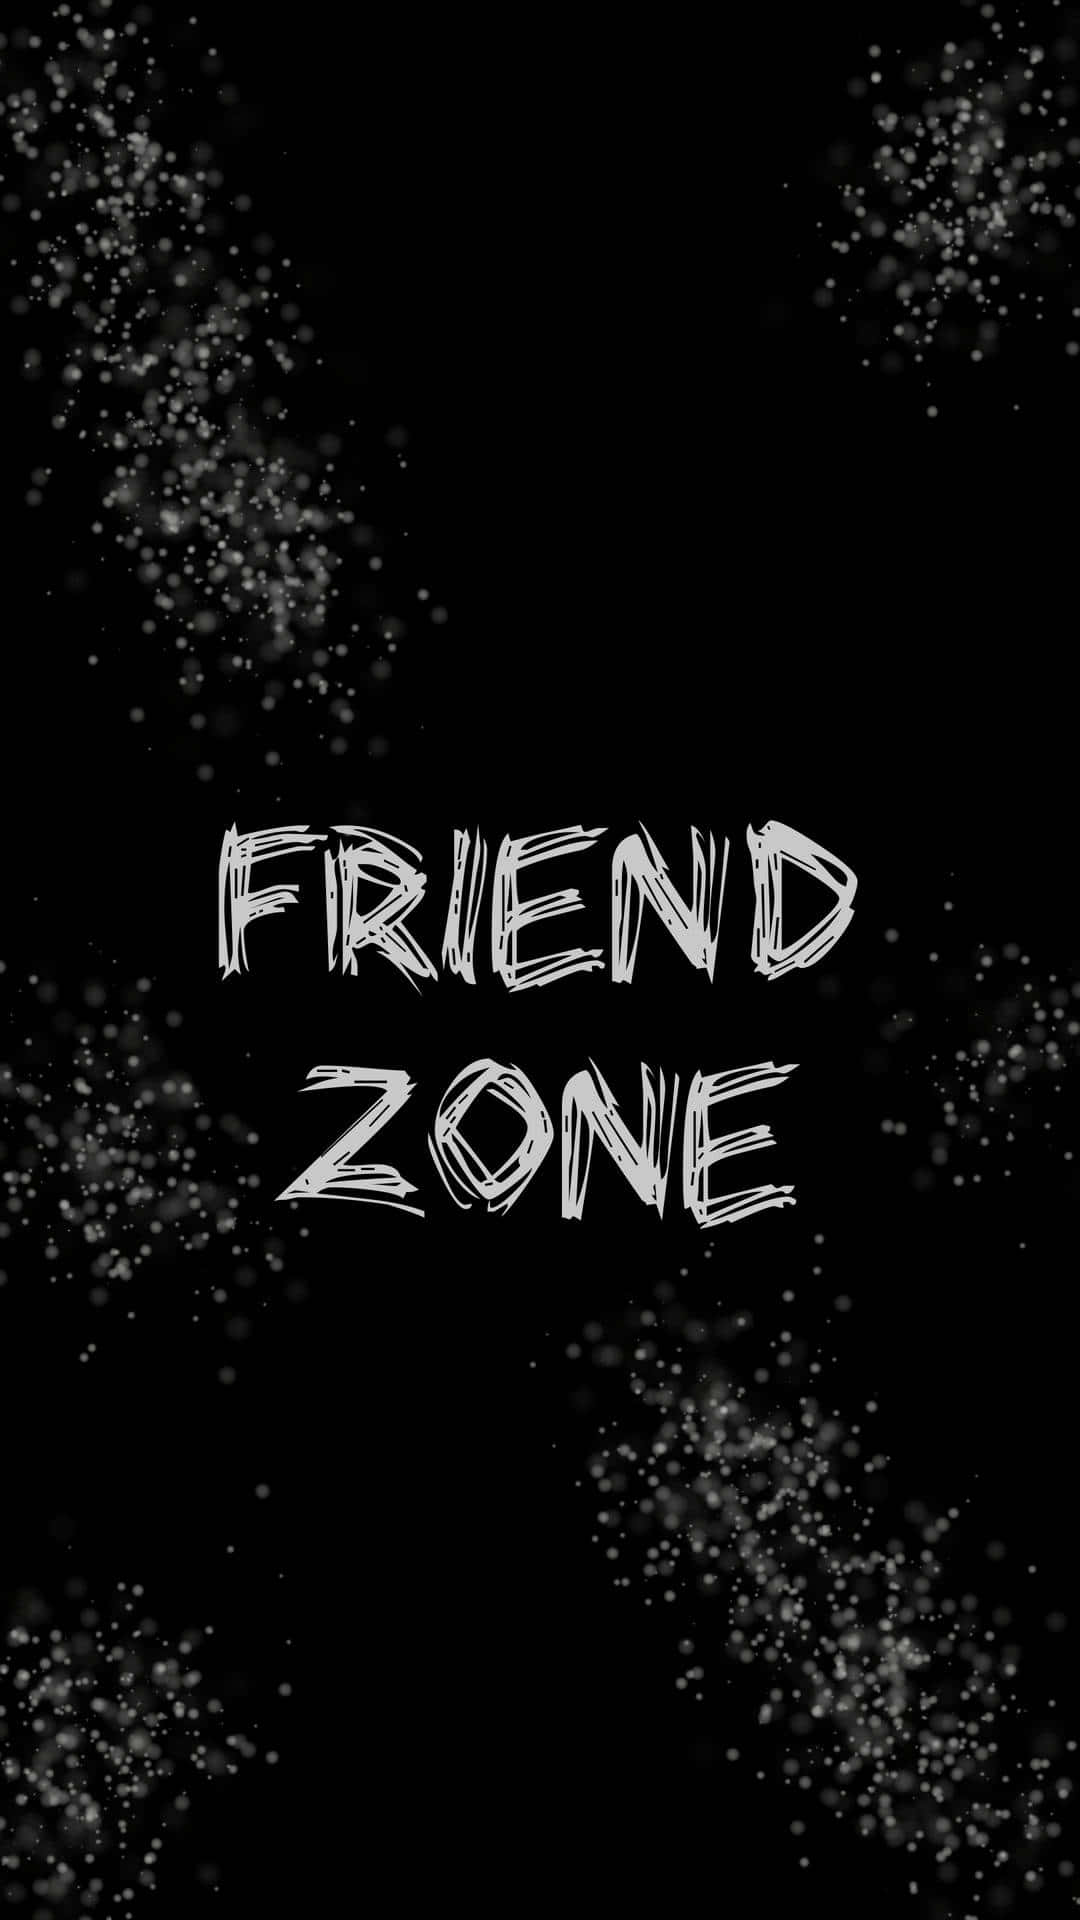 Friendly Zone Wallpaper